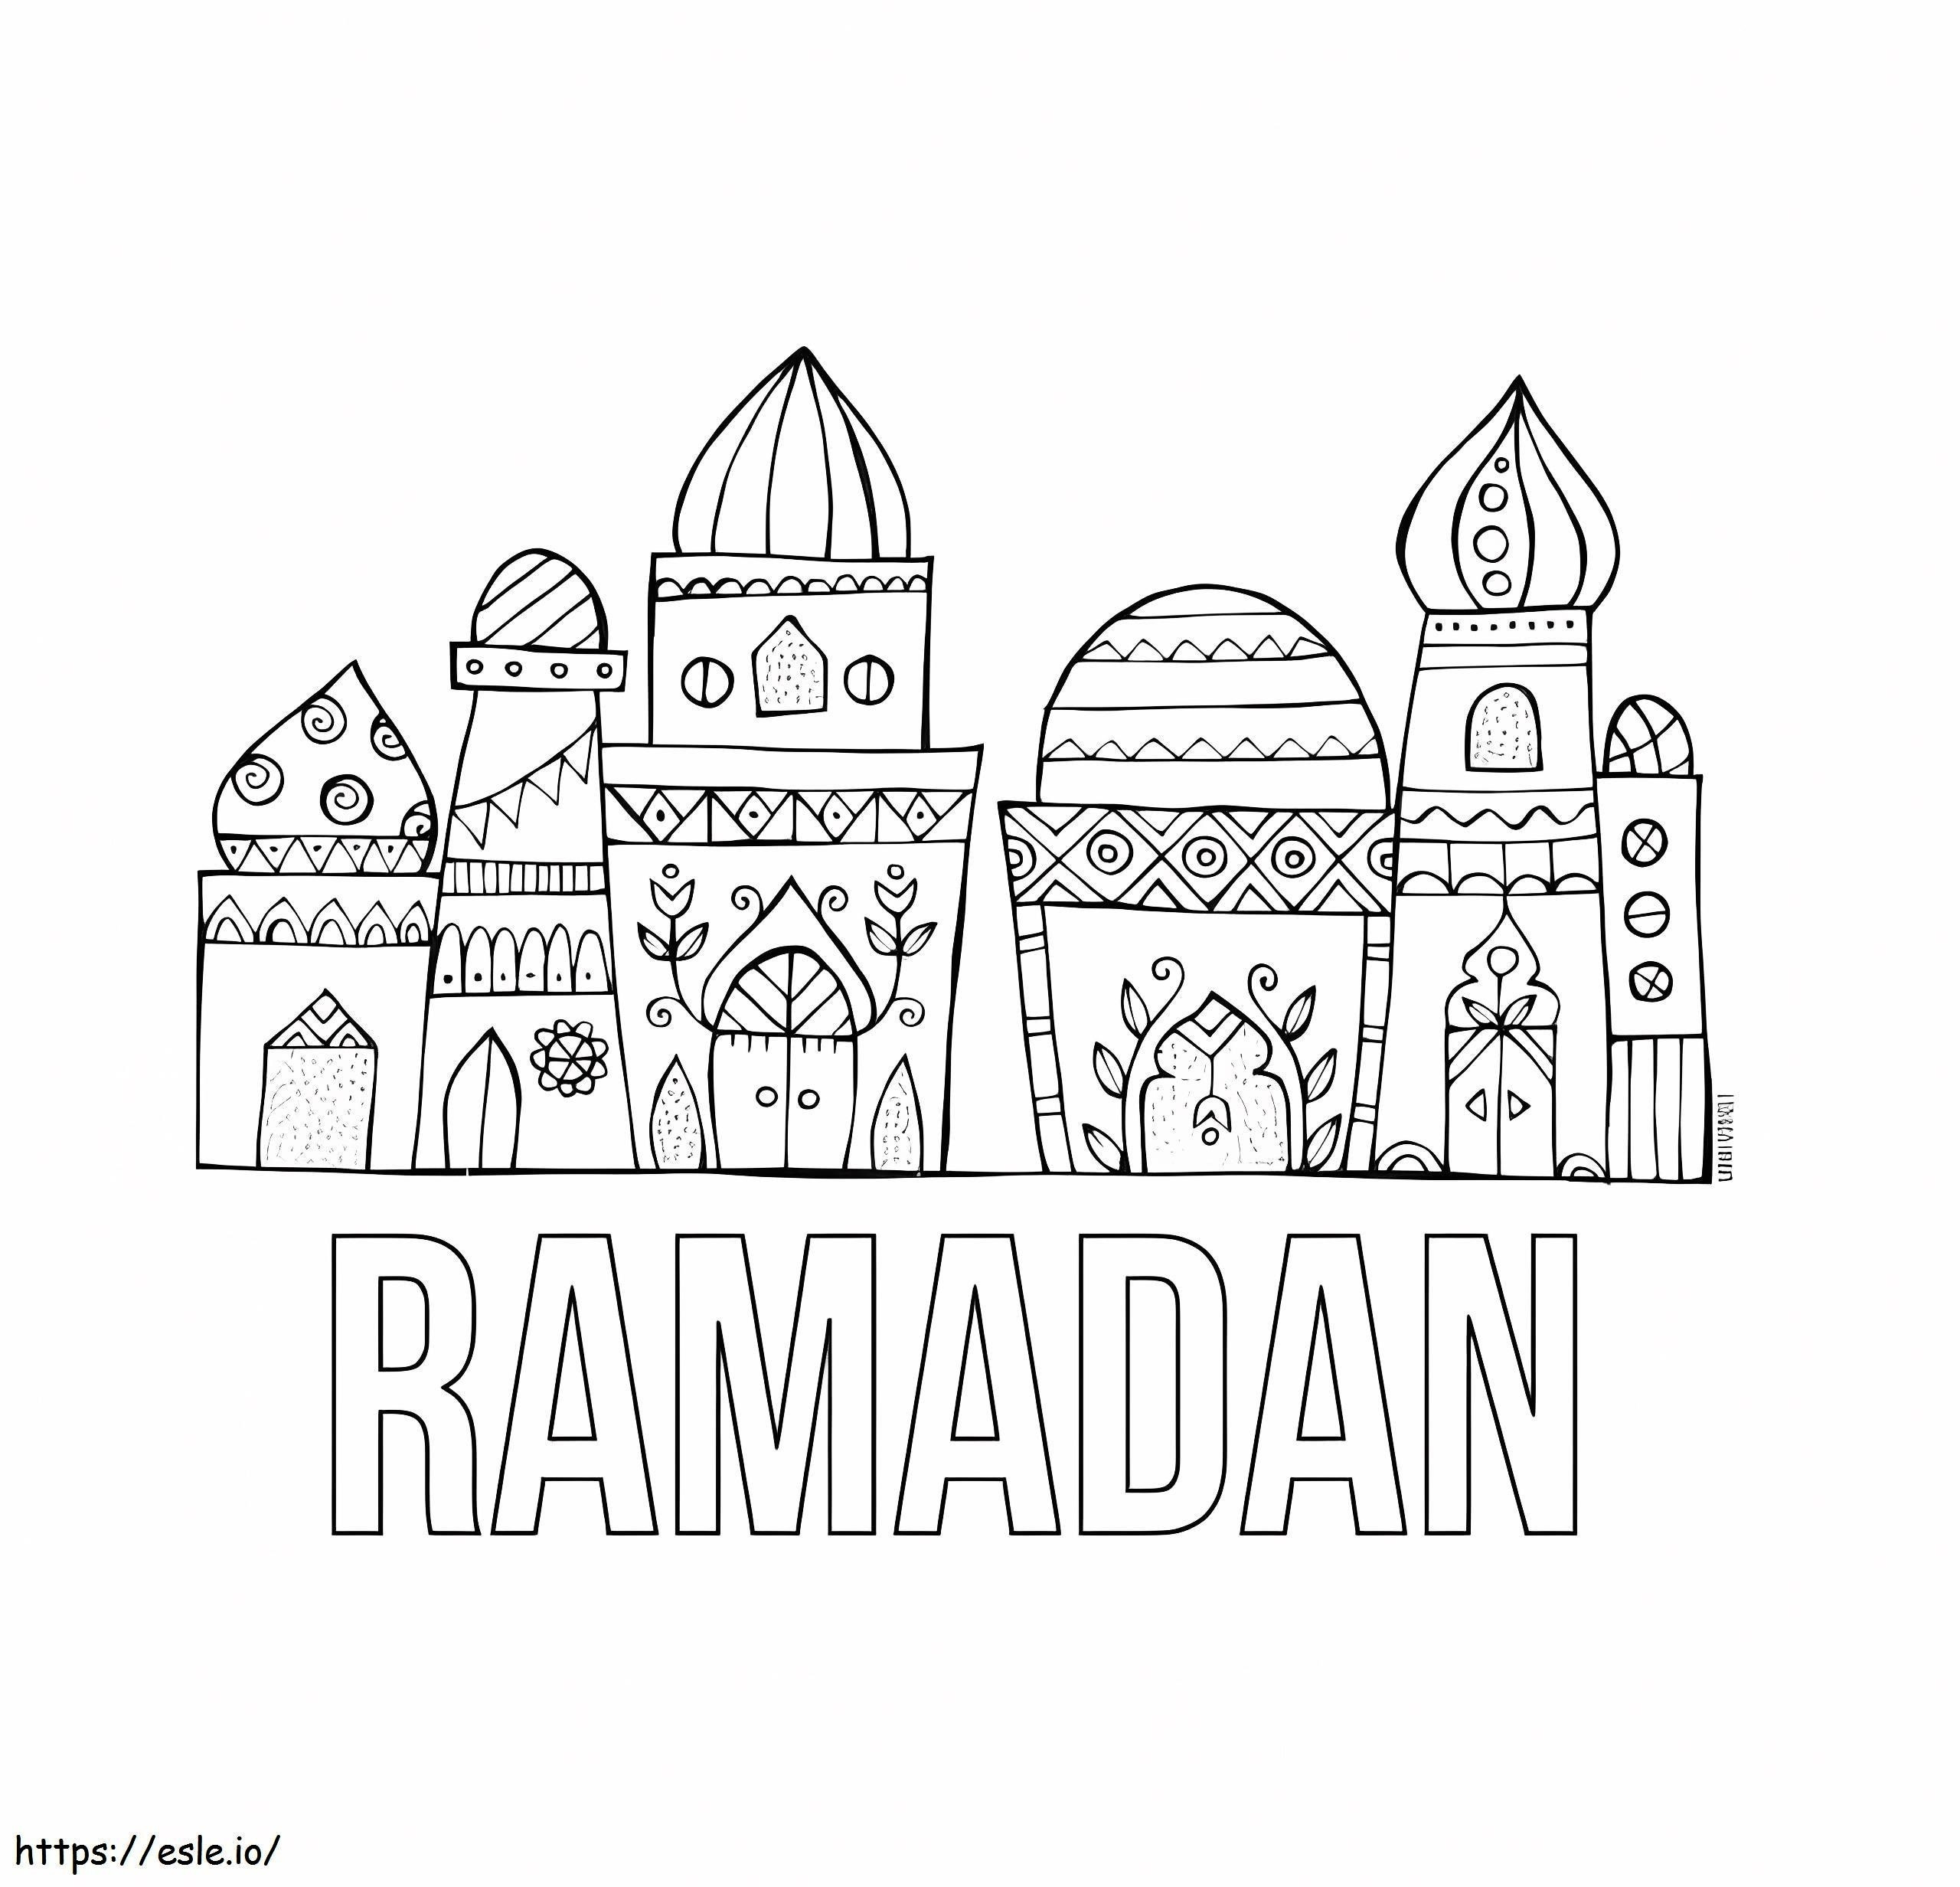 Ramadan 1 kolorowanka